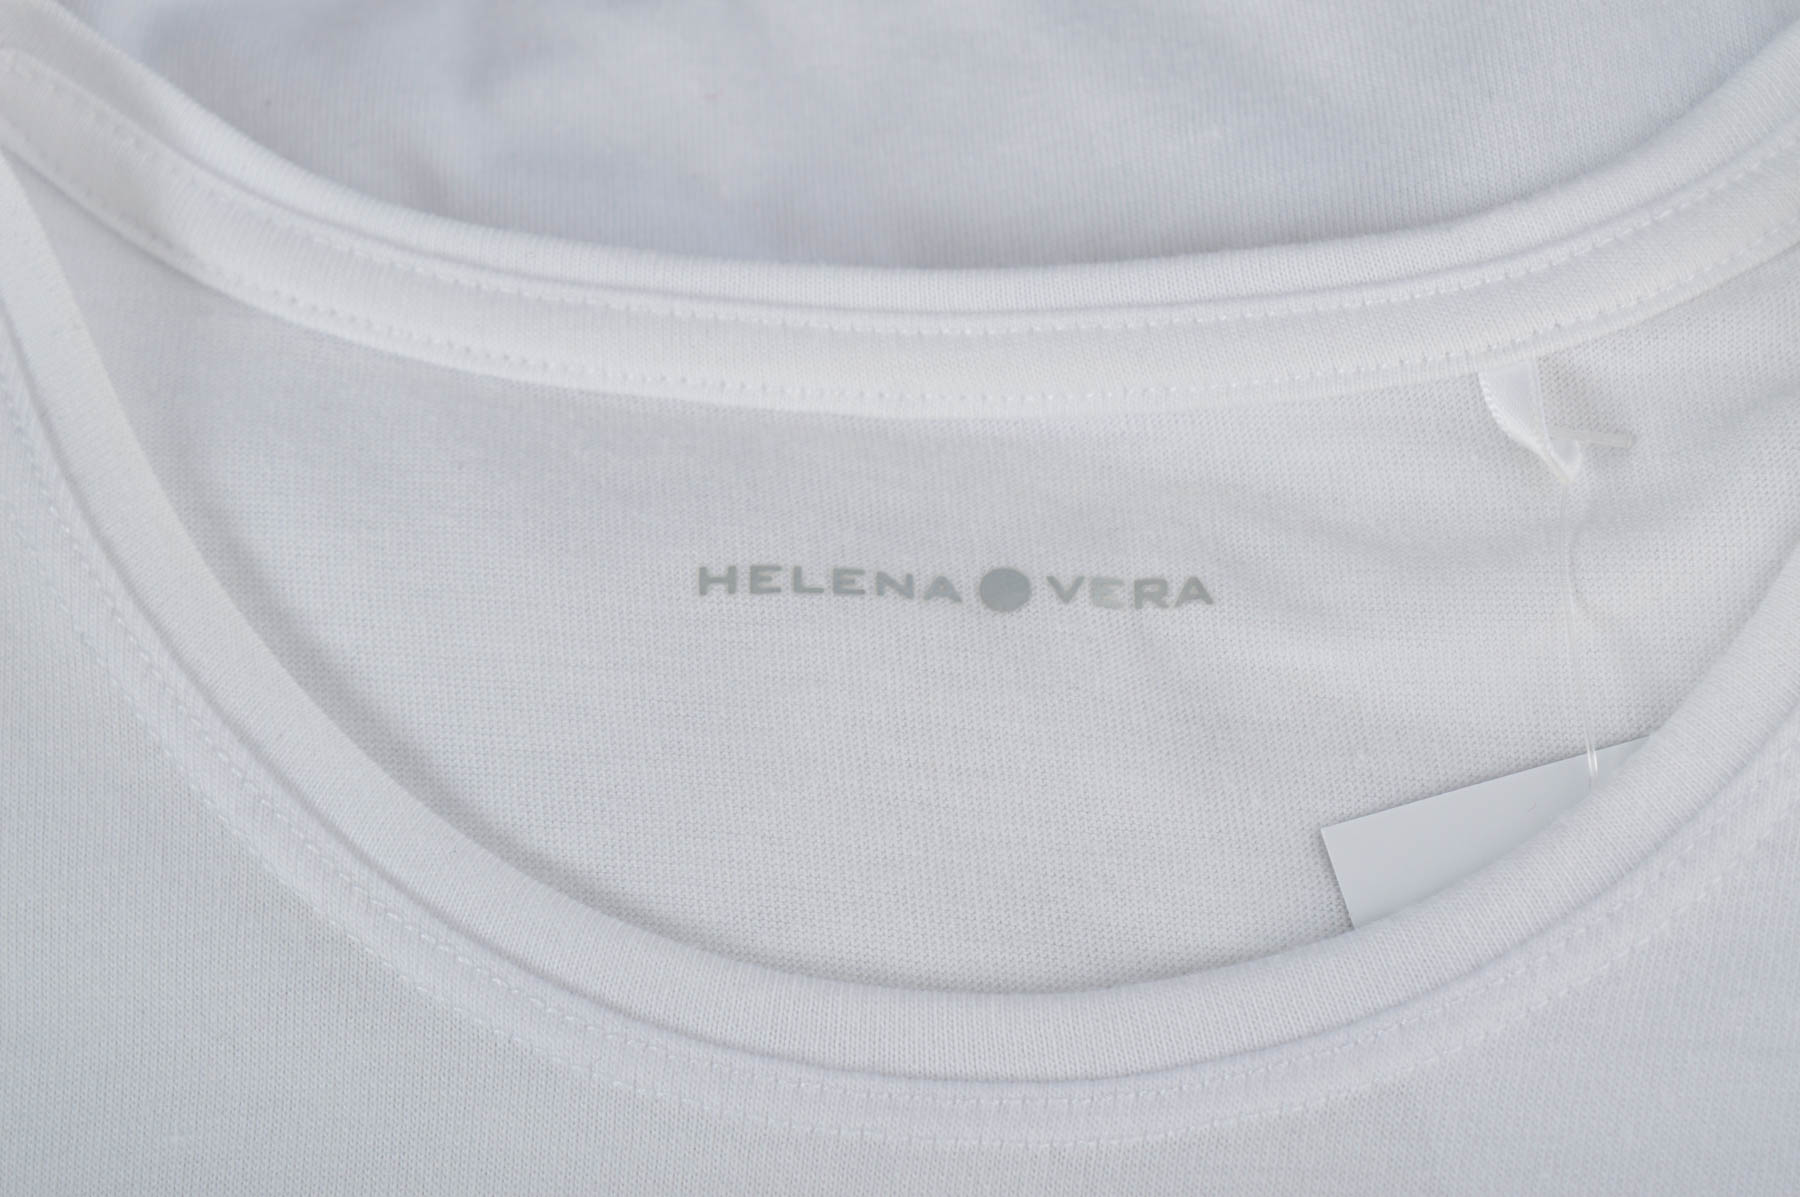 Дамска тениска - Helena Vera - 2